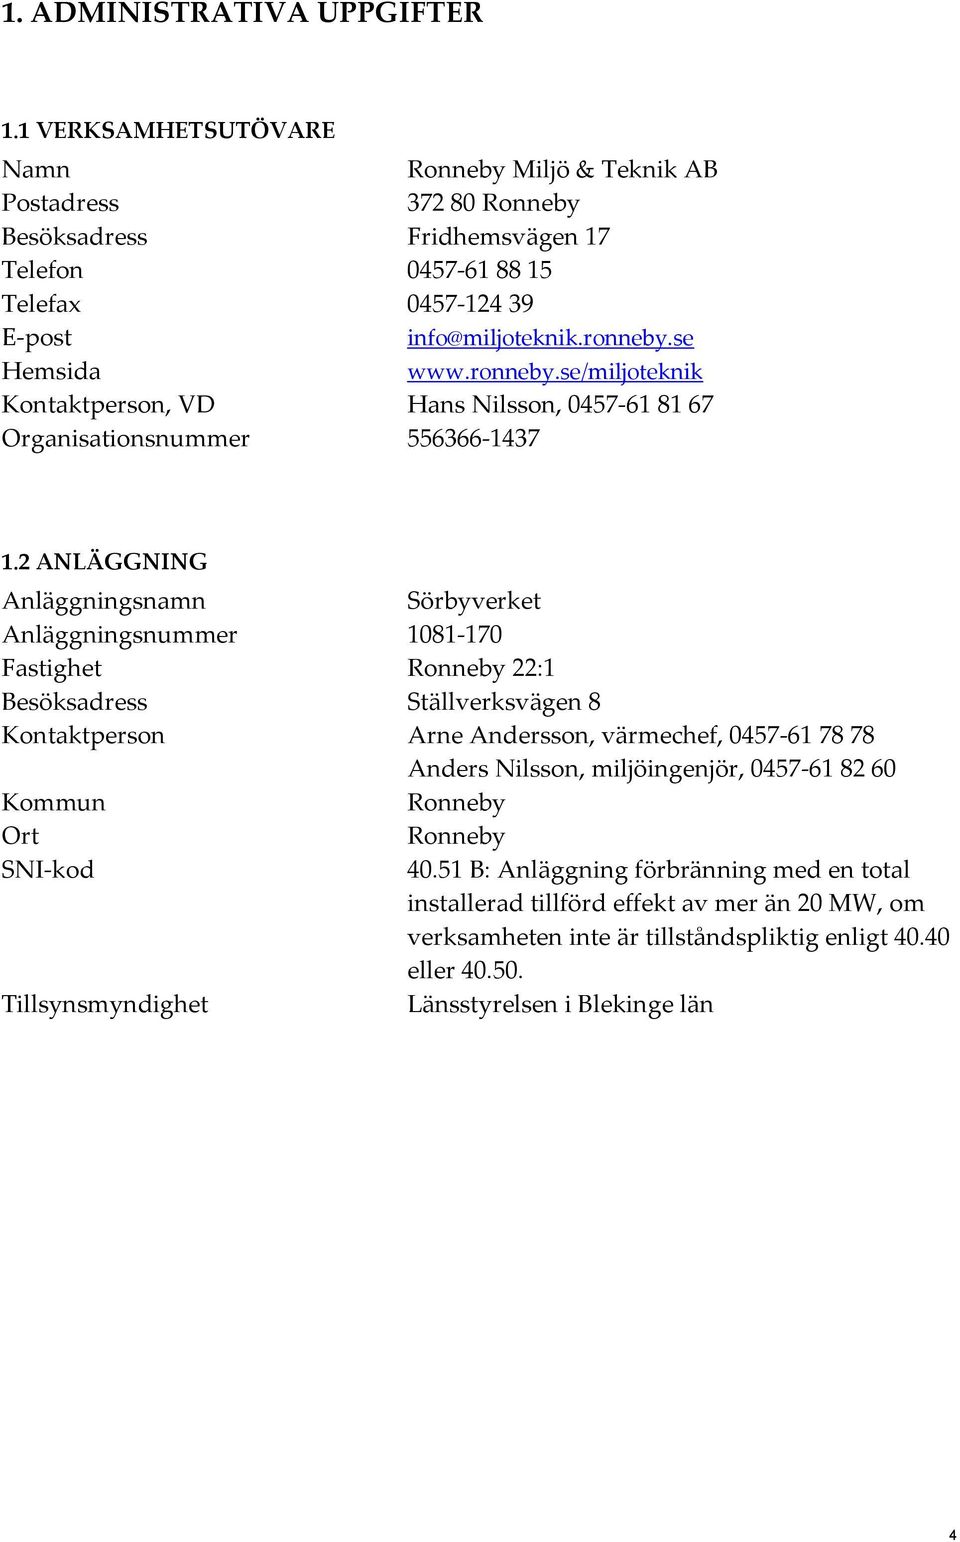 ronneby.se/miljoteknik Kontaktperson, VD Hans Nilsson, 0457-61 81 67 Organisationsnummer 556366-1437 1.